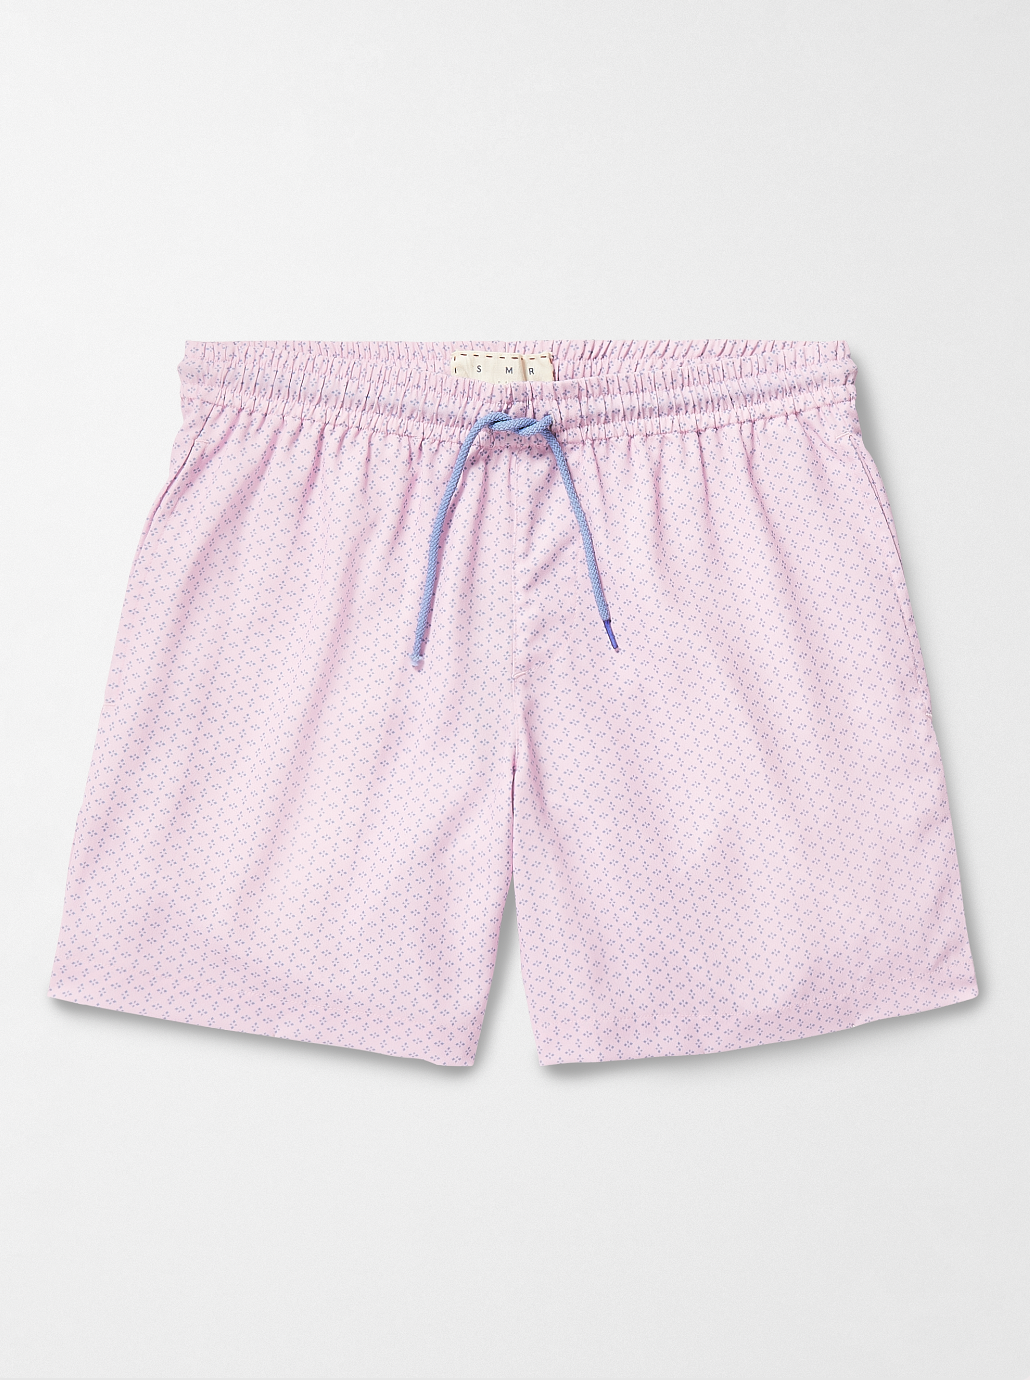 Porto Swim Shorts in Powder Pink